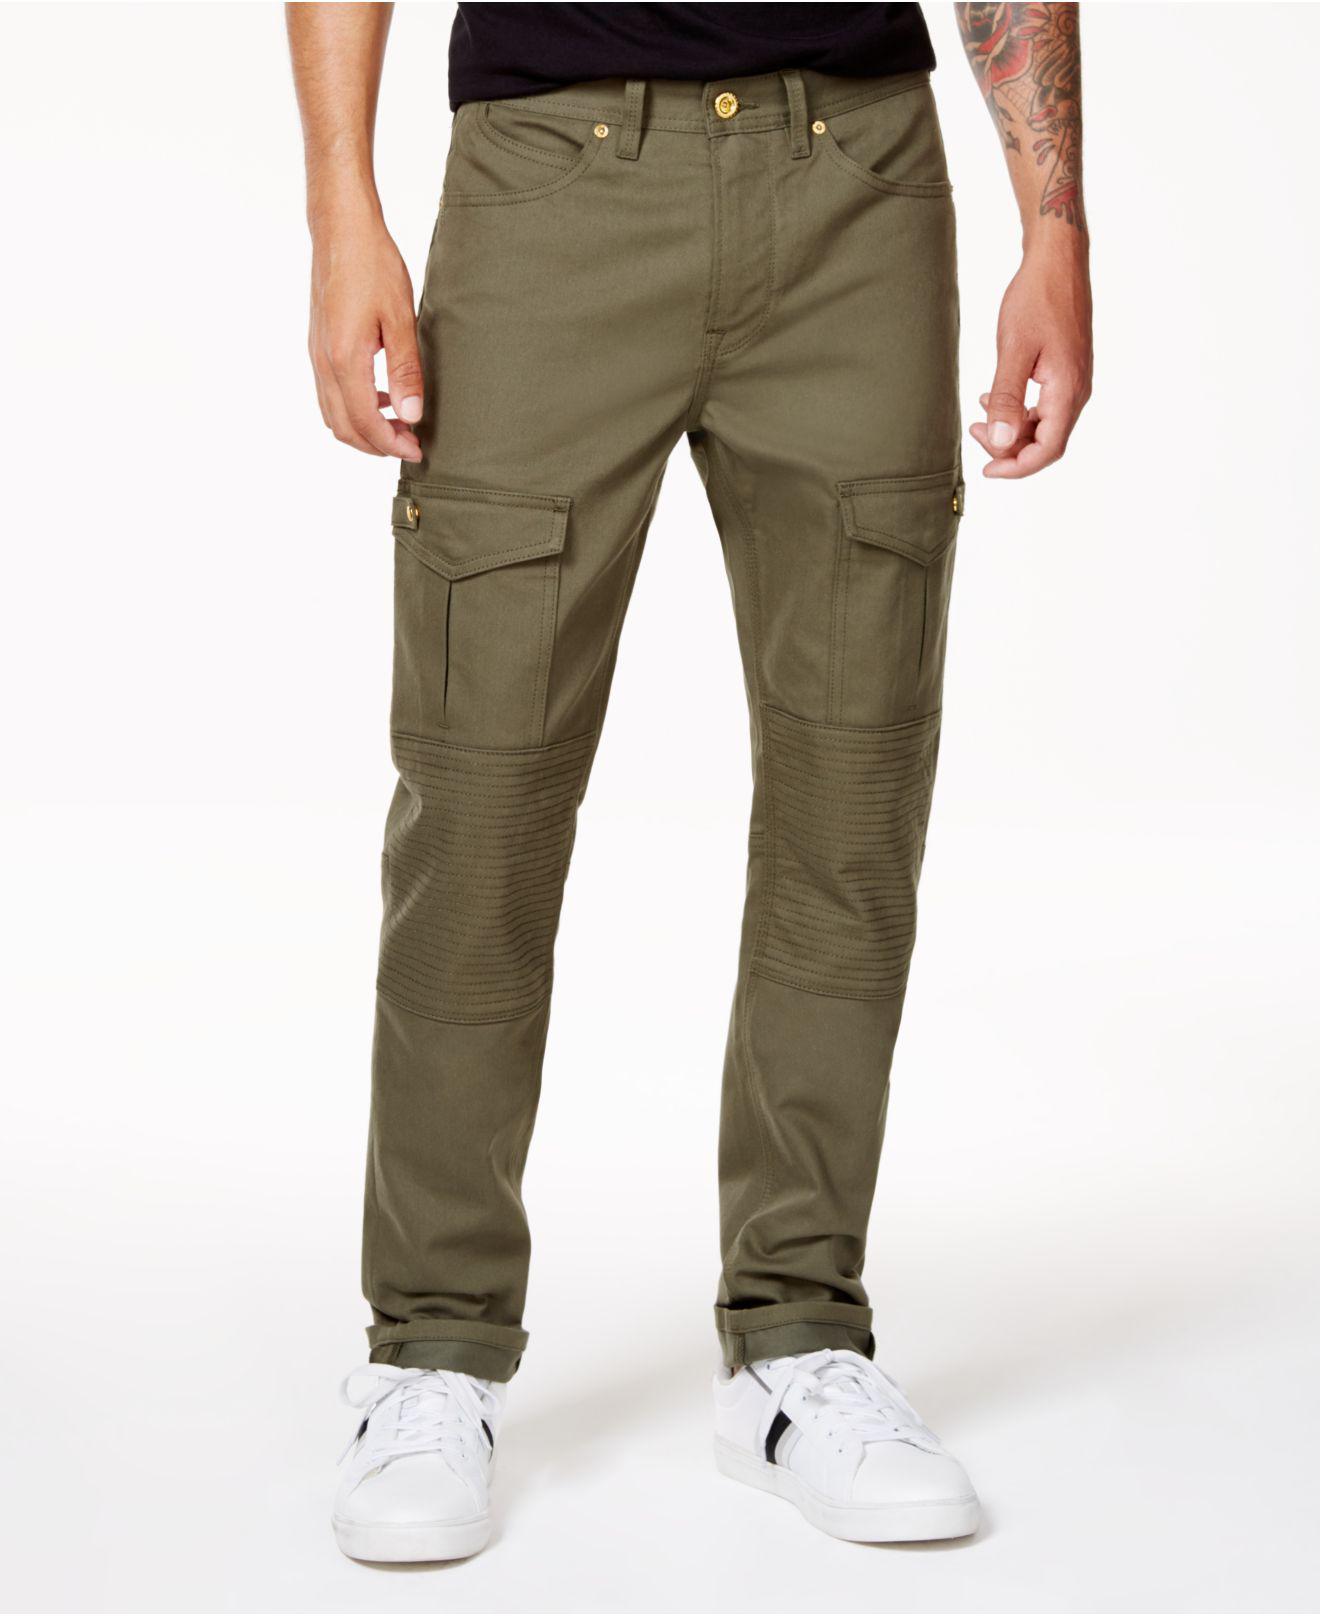 Sean John Cotton Men's Navy Cargo Pants in Olive (Green) for Men - Lyst